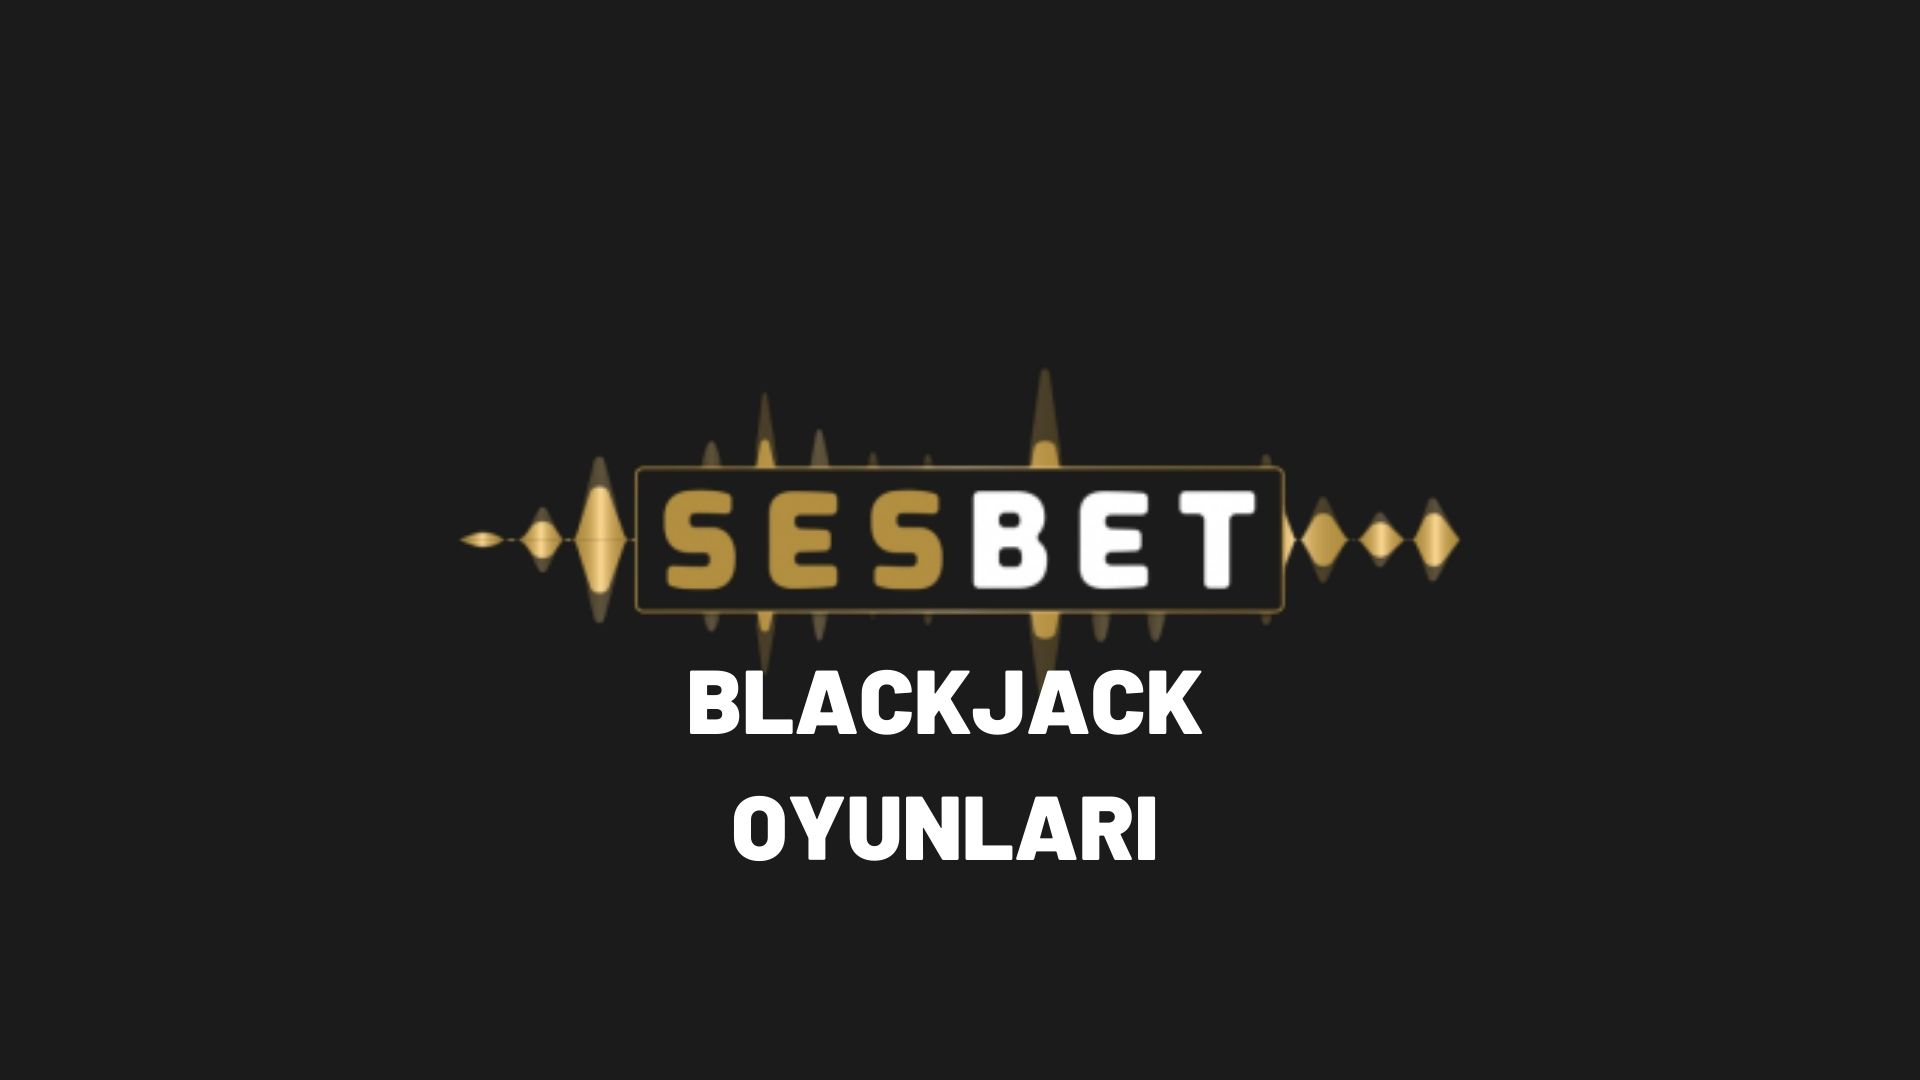 sesbet-blackjack-oyunlari